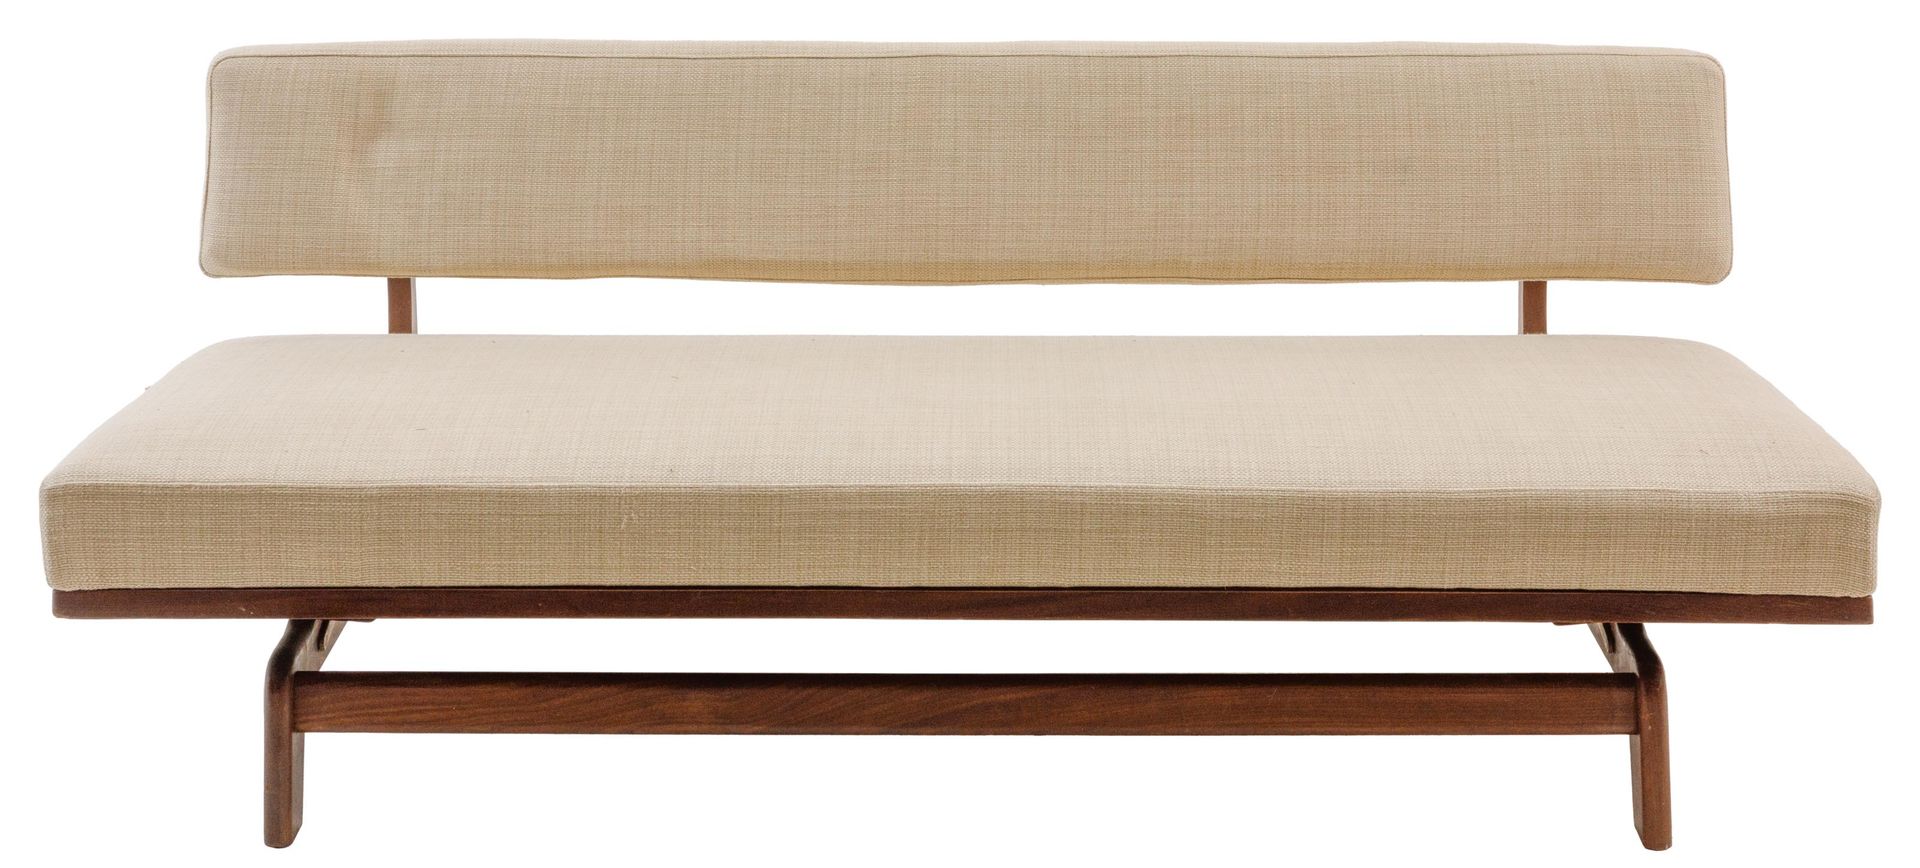 HANS BELLMANN (1911-1990) / WILKHAHN 躺椅。470型。1960年期间。

木制胡桃木框架。

背部和座椅采用羊毛软垫。

靠&hellip;